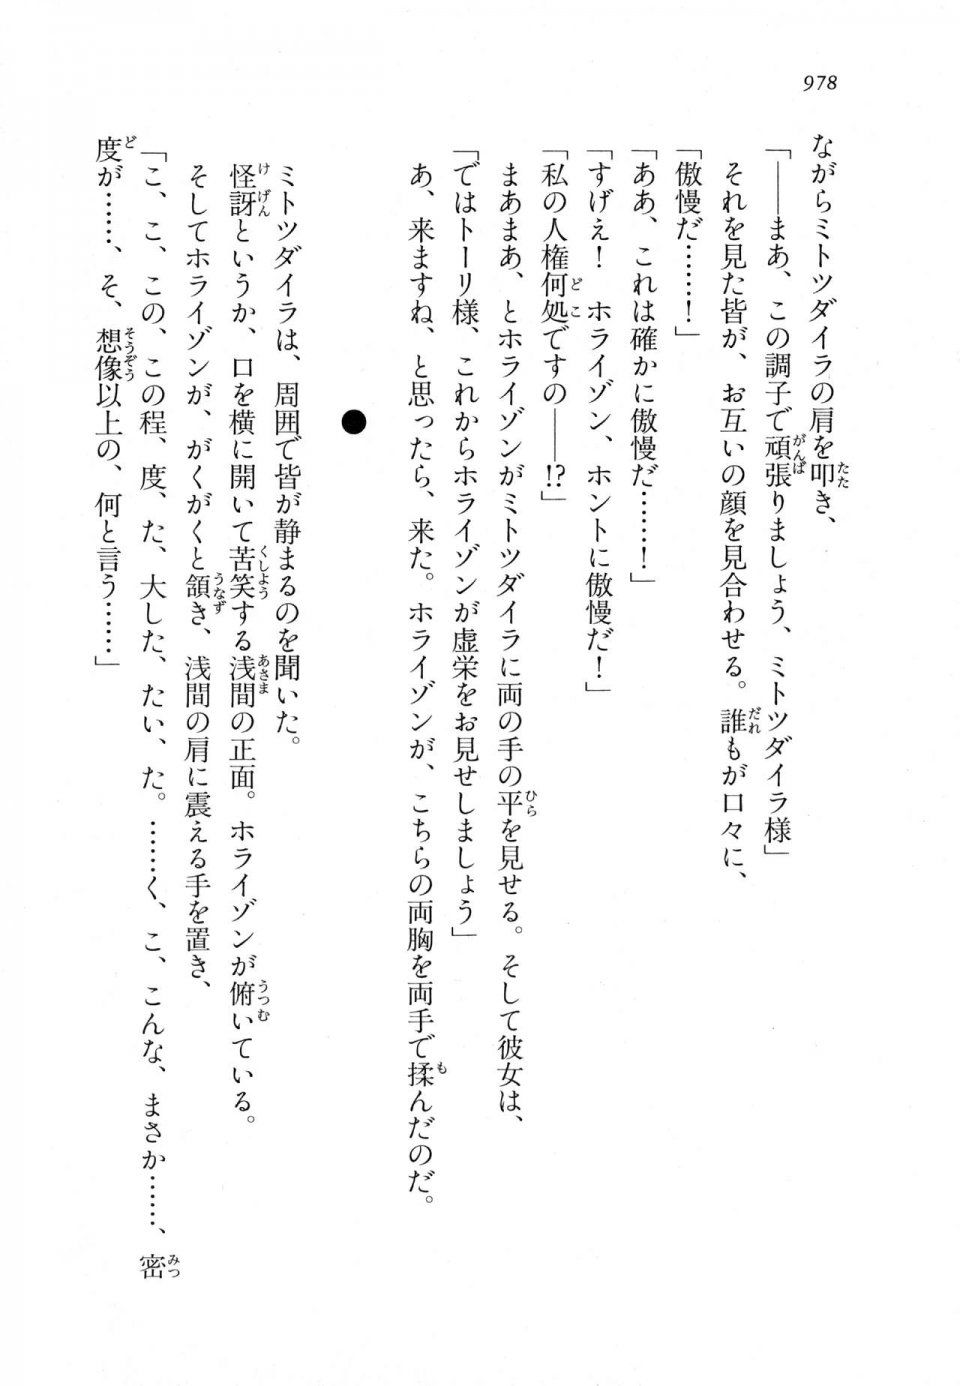 Kyoukai Senjou no Horizon LN Vol 18(7C) Part 2 - Photo #417